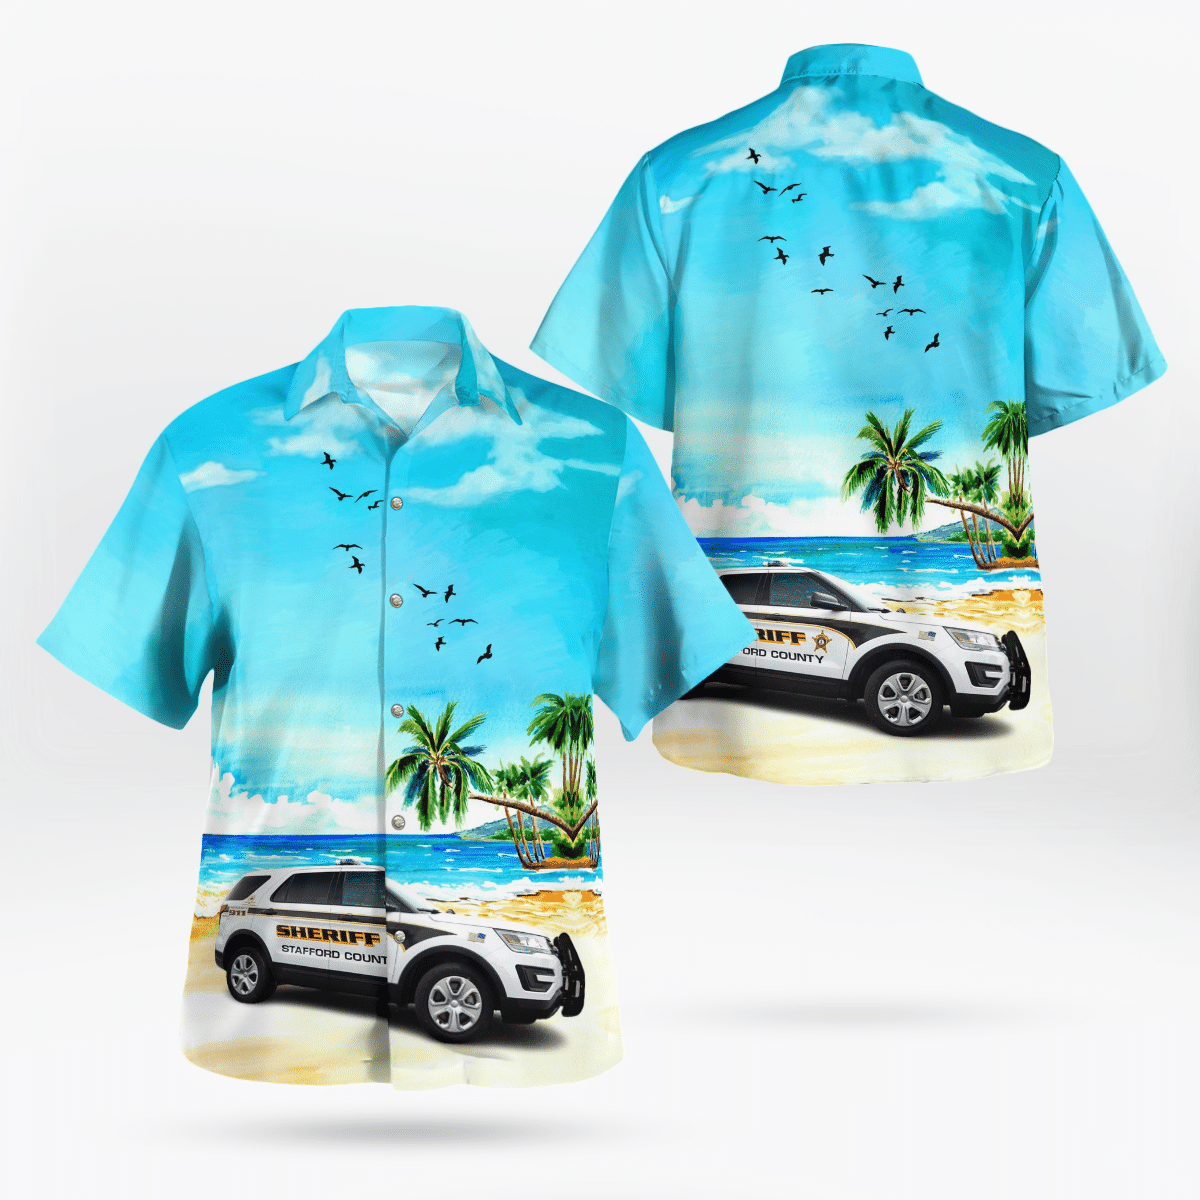 Why don't you order Hot Hawaiian Shirt today? 67